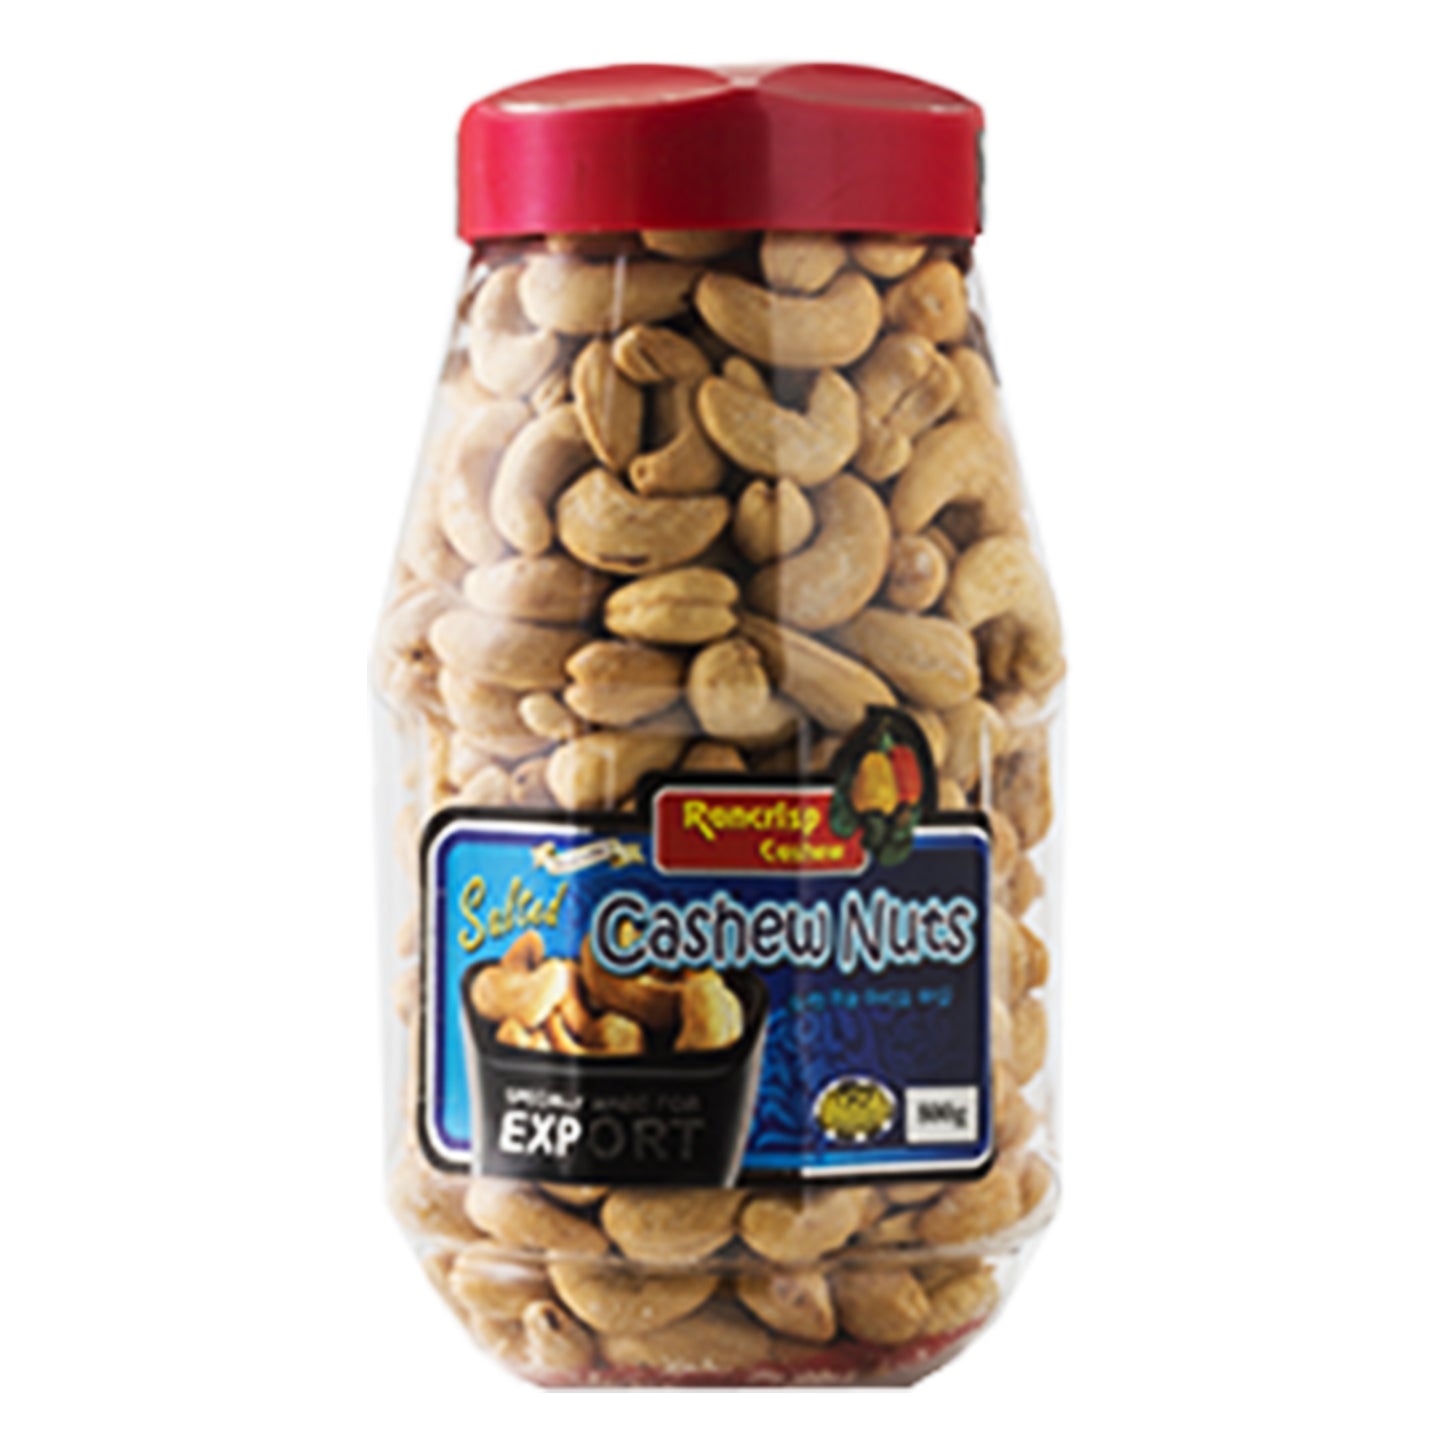 Rancrisp Salted Cashew Nuts (800g)